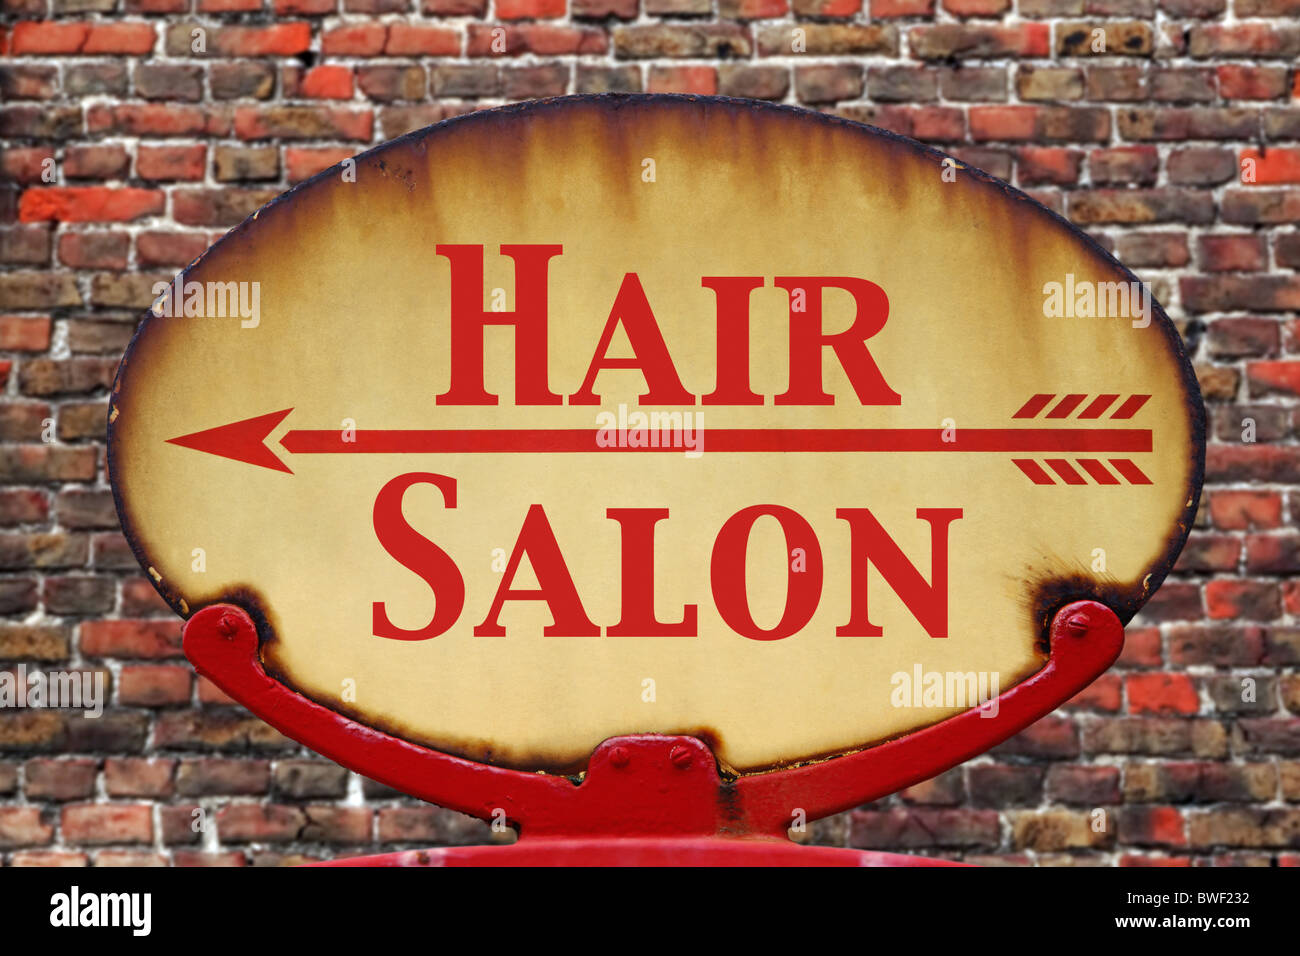 A rusty old retro arrow sign with the text Hair salon Stock Photo